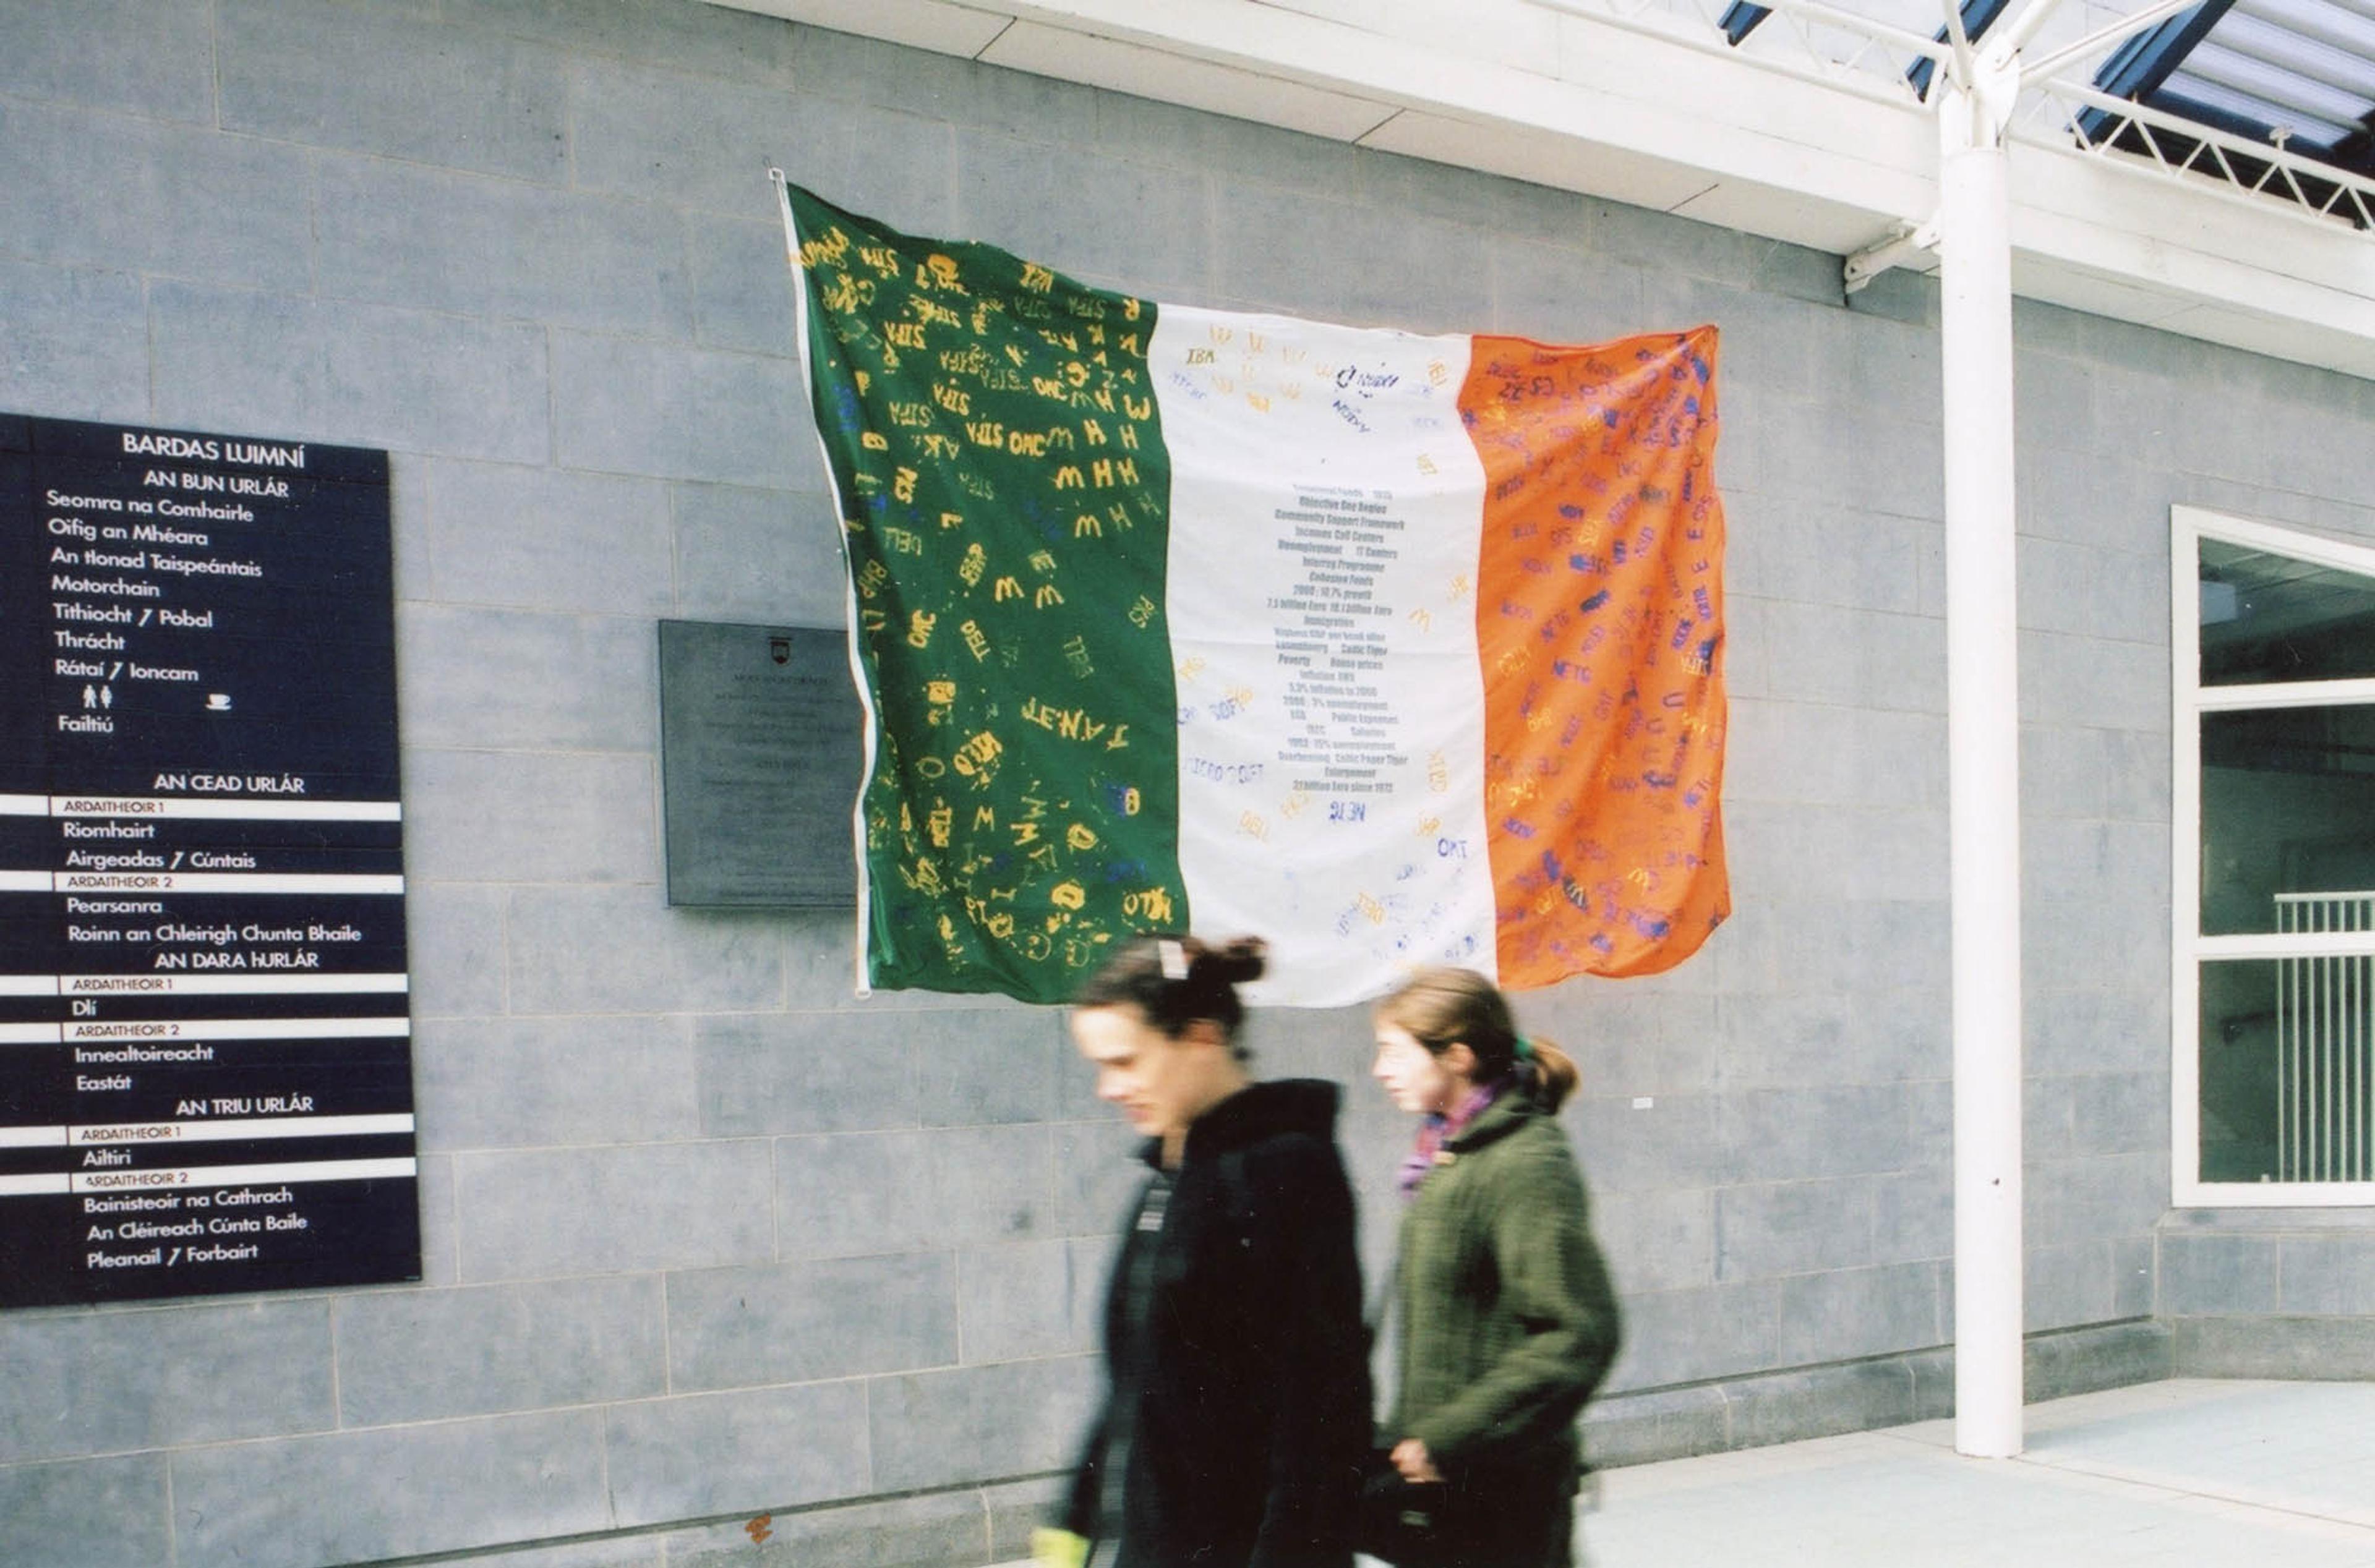 (2001) Jota Castro and Carmela Uranga, Starching the Flag, 2001, public printing event, Irish flag, potato-cuts, coloured ink and starch. 